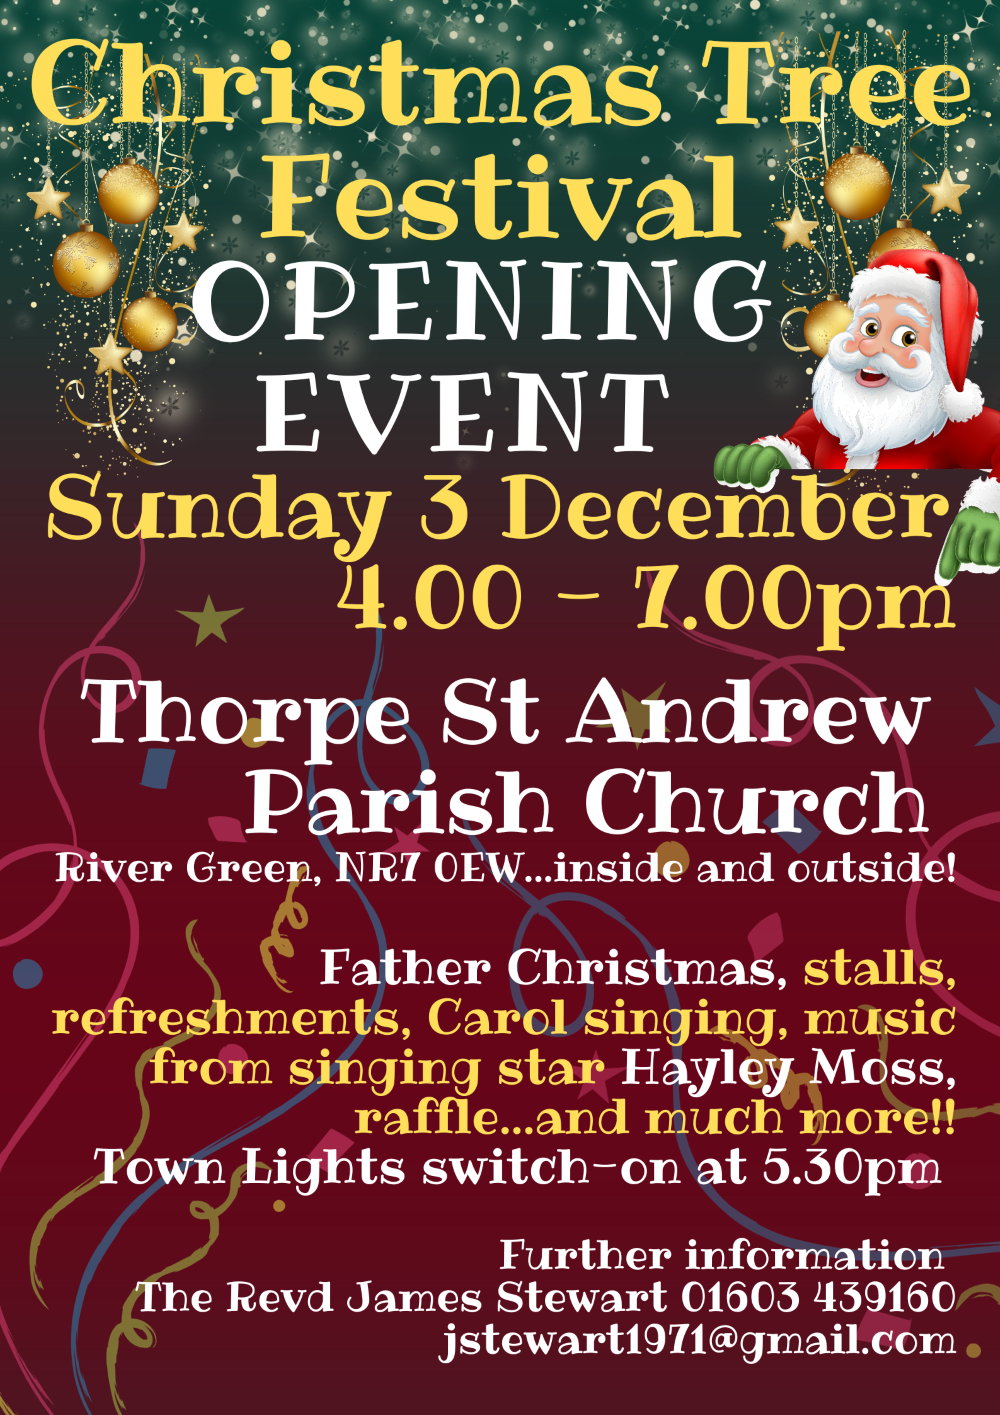 Thorpe Parish Church Annual Christmas Tree Festival Poster